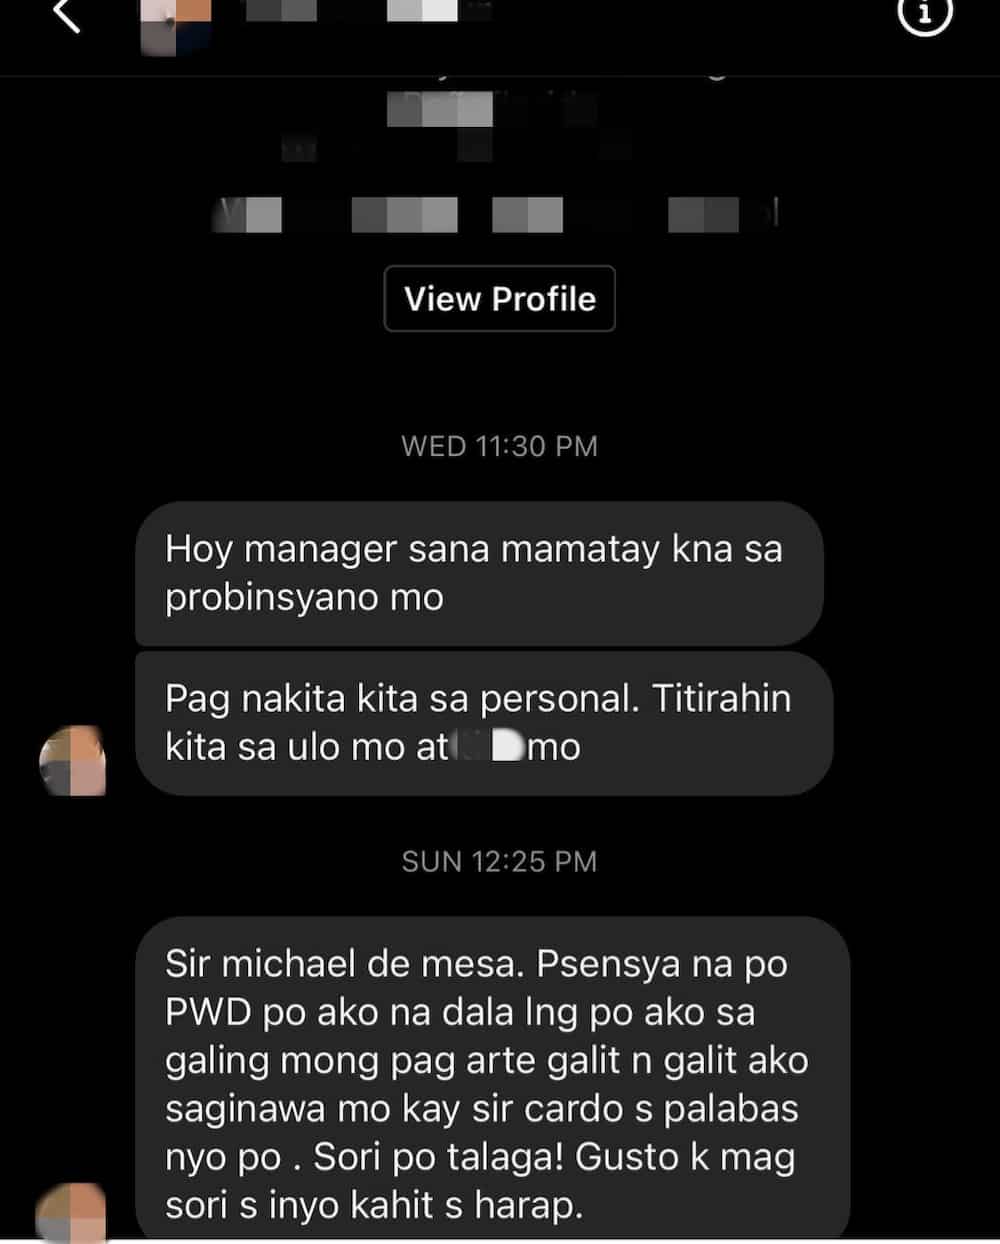 Michael de Mesa posted netizen's apology over "death threat"